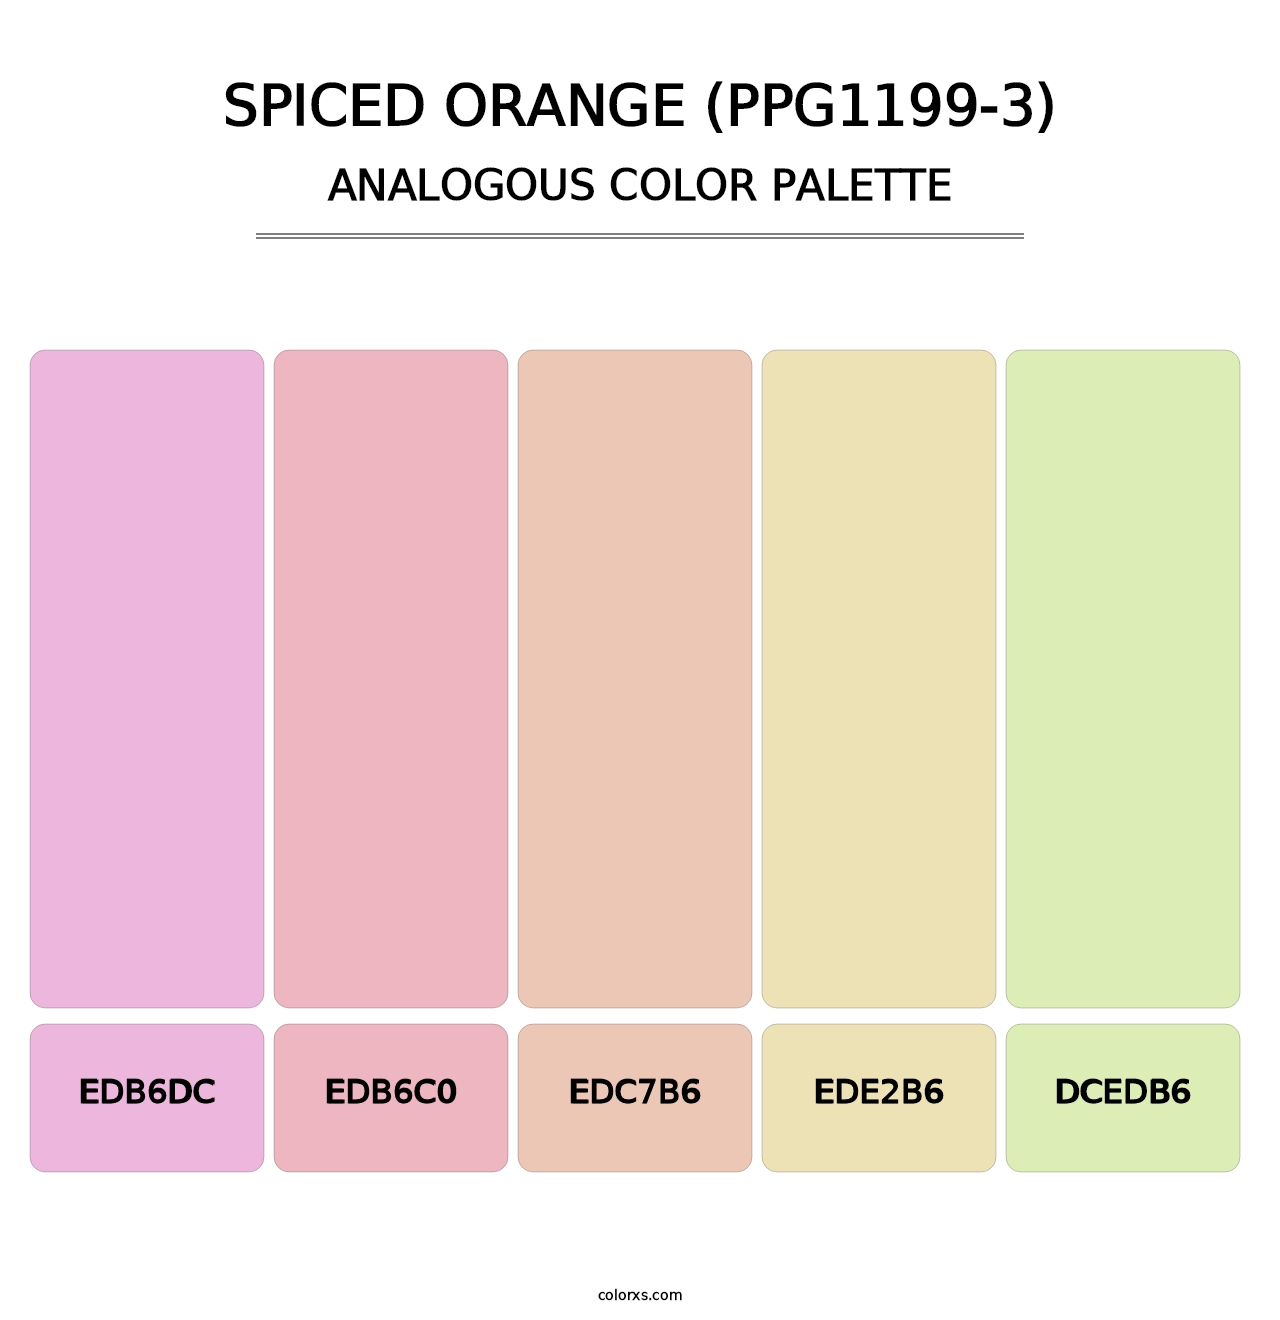 Spiced Orange (PPG1199-3) - Analogous Color Palette